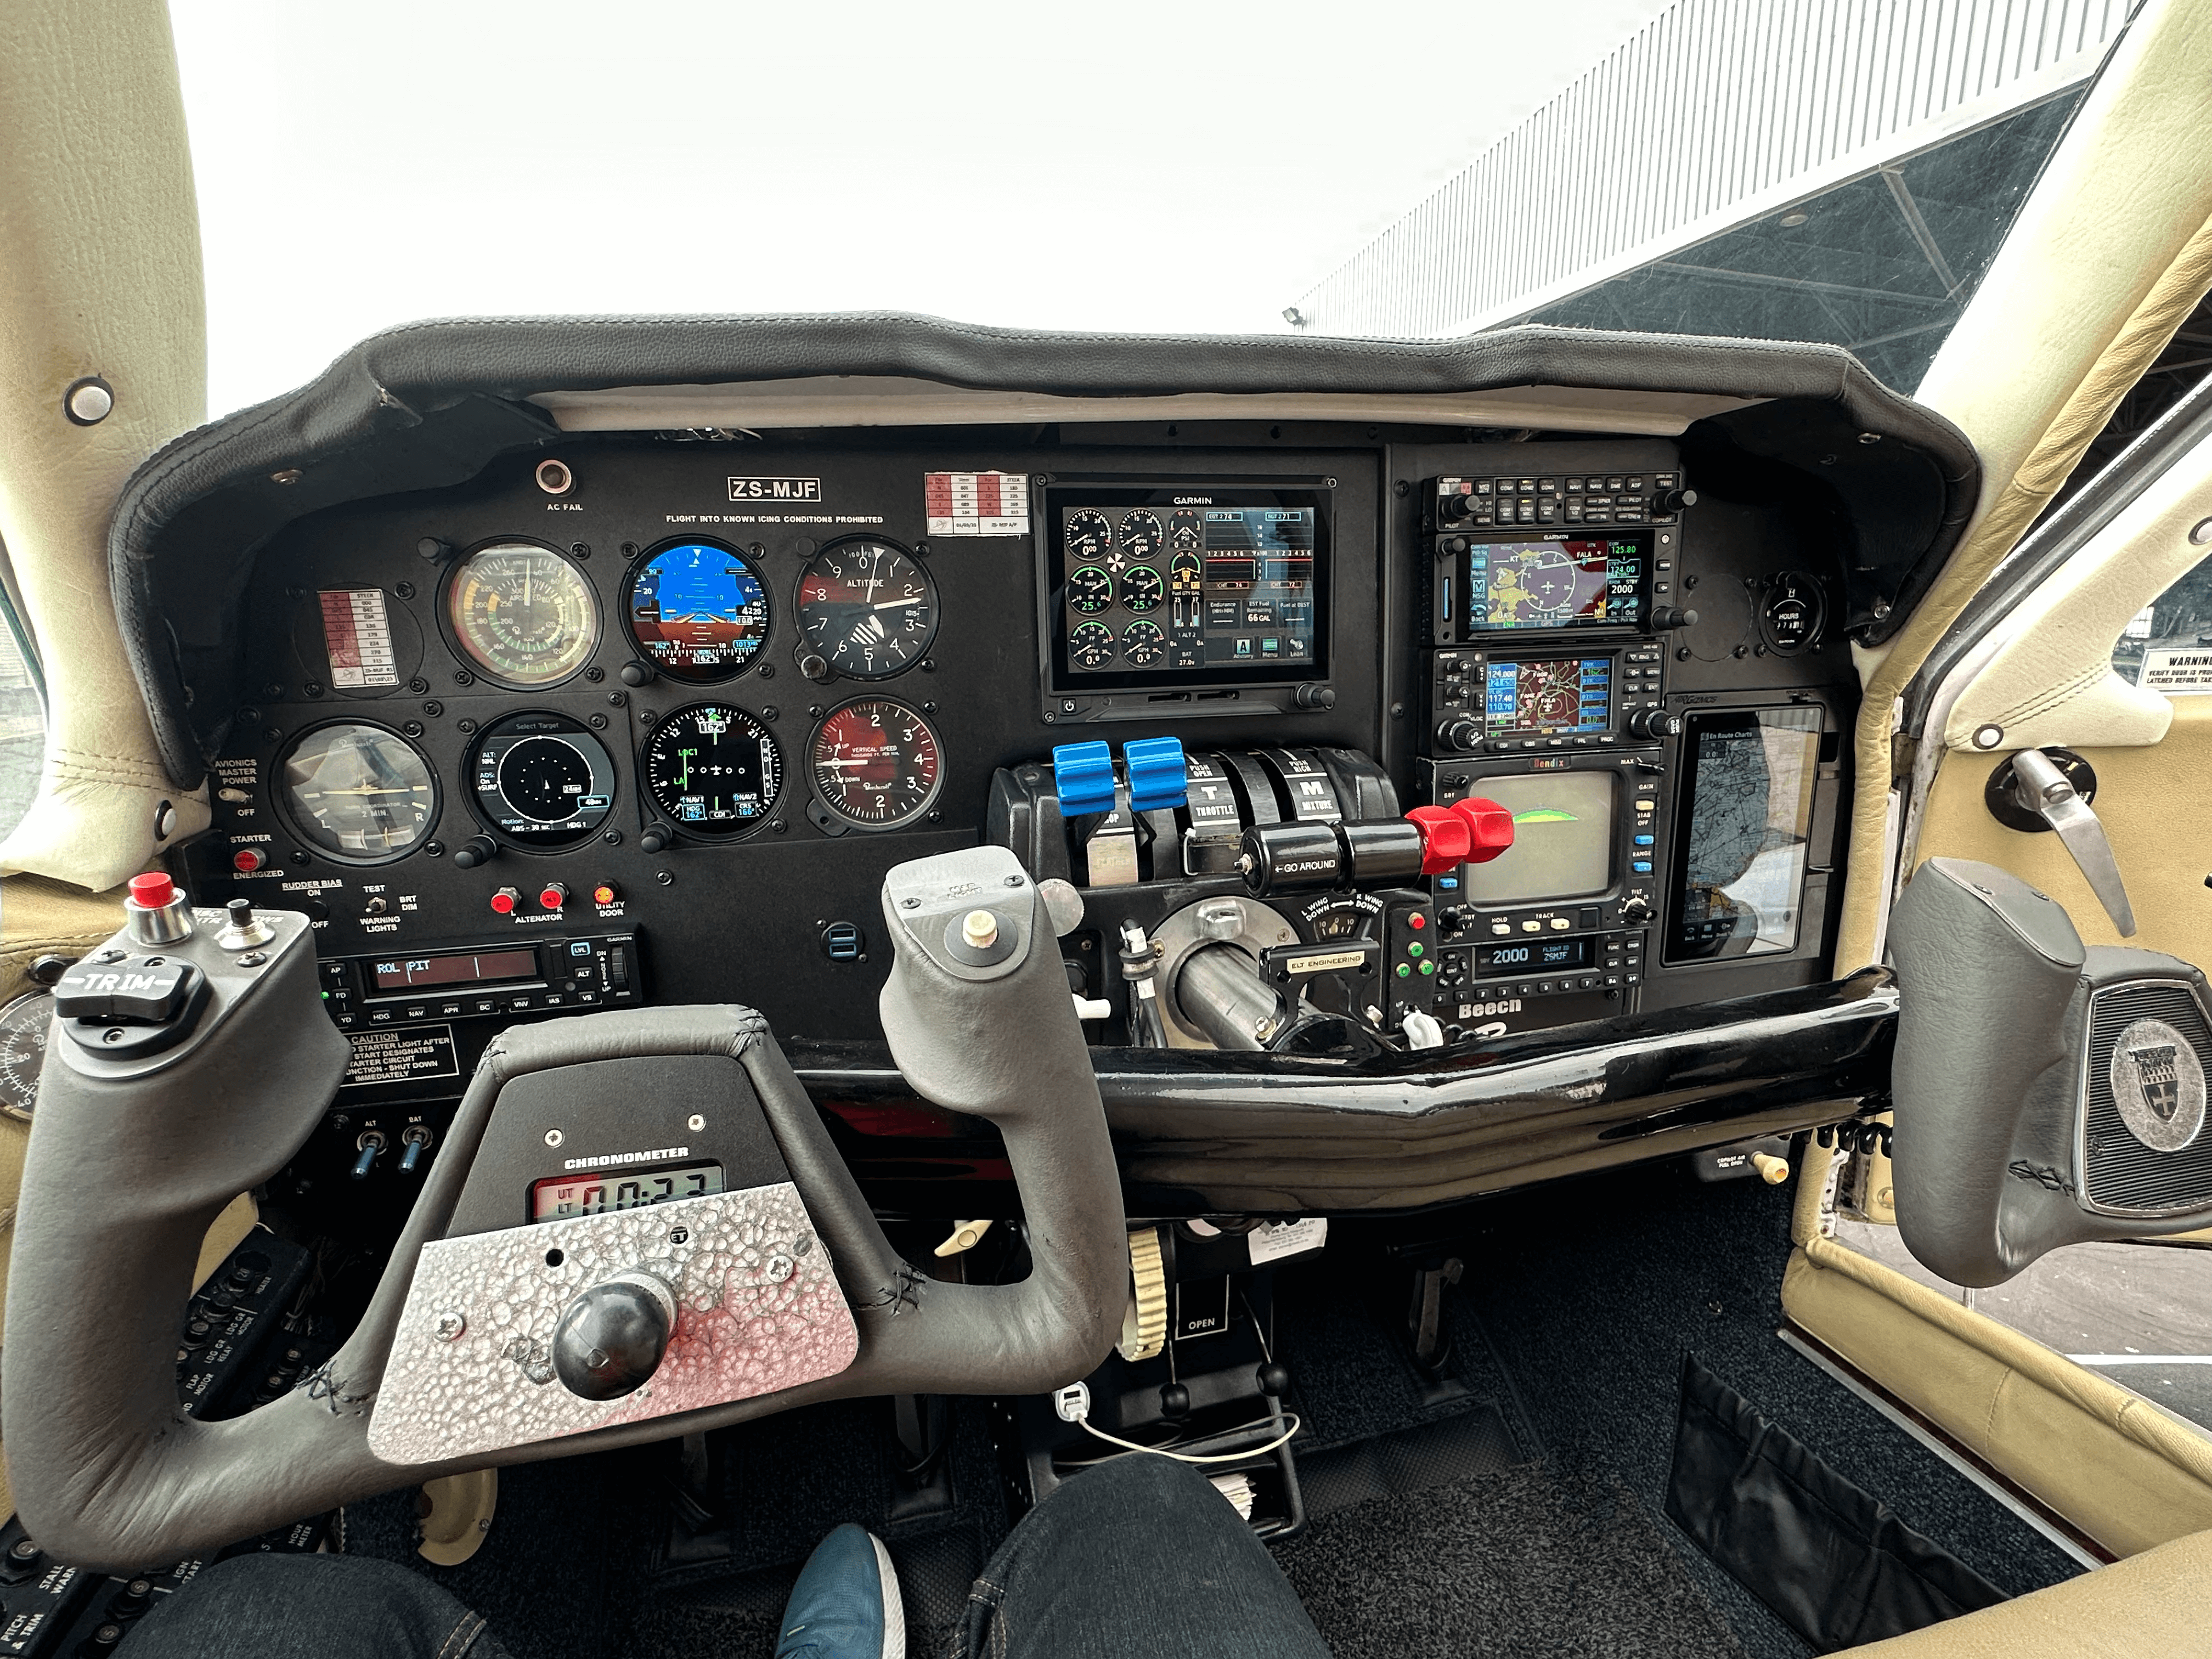 Install Garmin GI 275 Attitude, GI 275 H.S.I., GI 275 MFD, G500TXi 7 inch Engine Indication System, GTN650Xi, GTX345 ADS-b in/out Transponder, GFC600 Autopilot and Panel Mounted aera 760 GPS into a Beechcraft Baron 58.